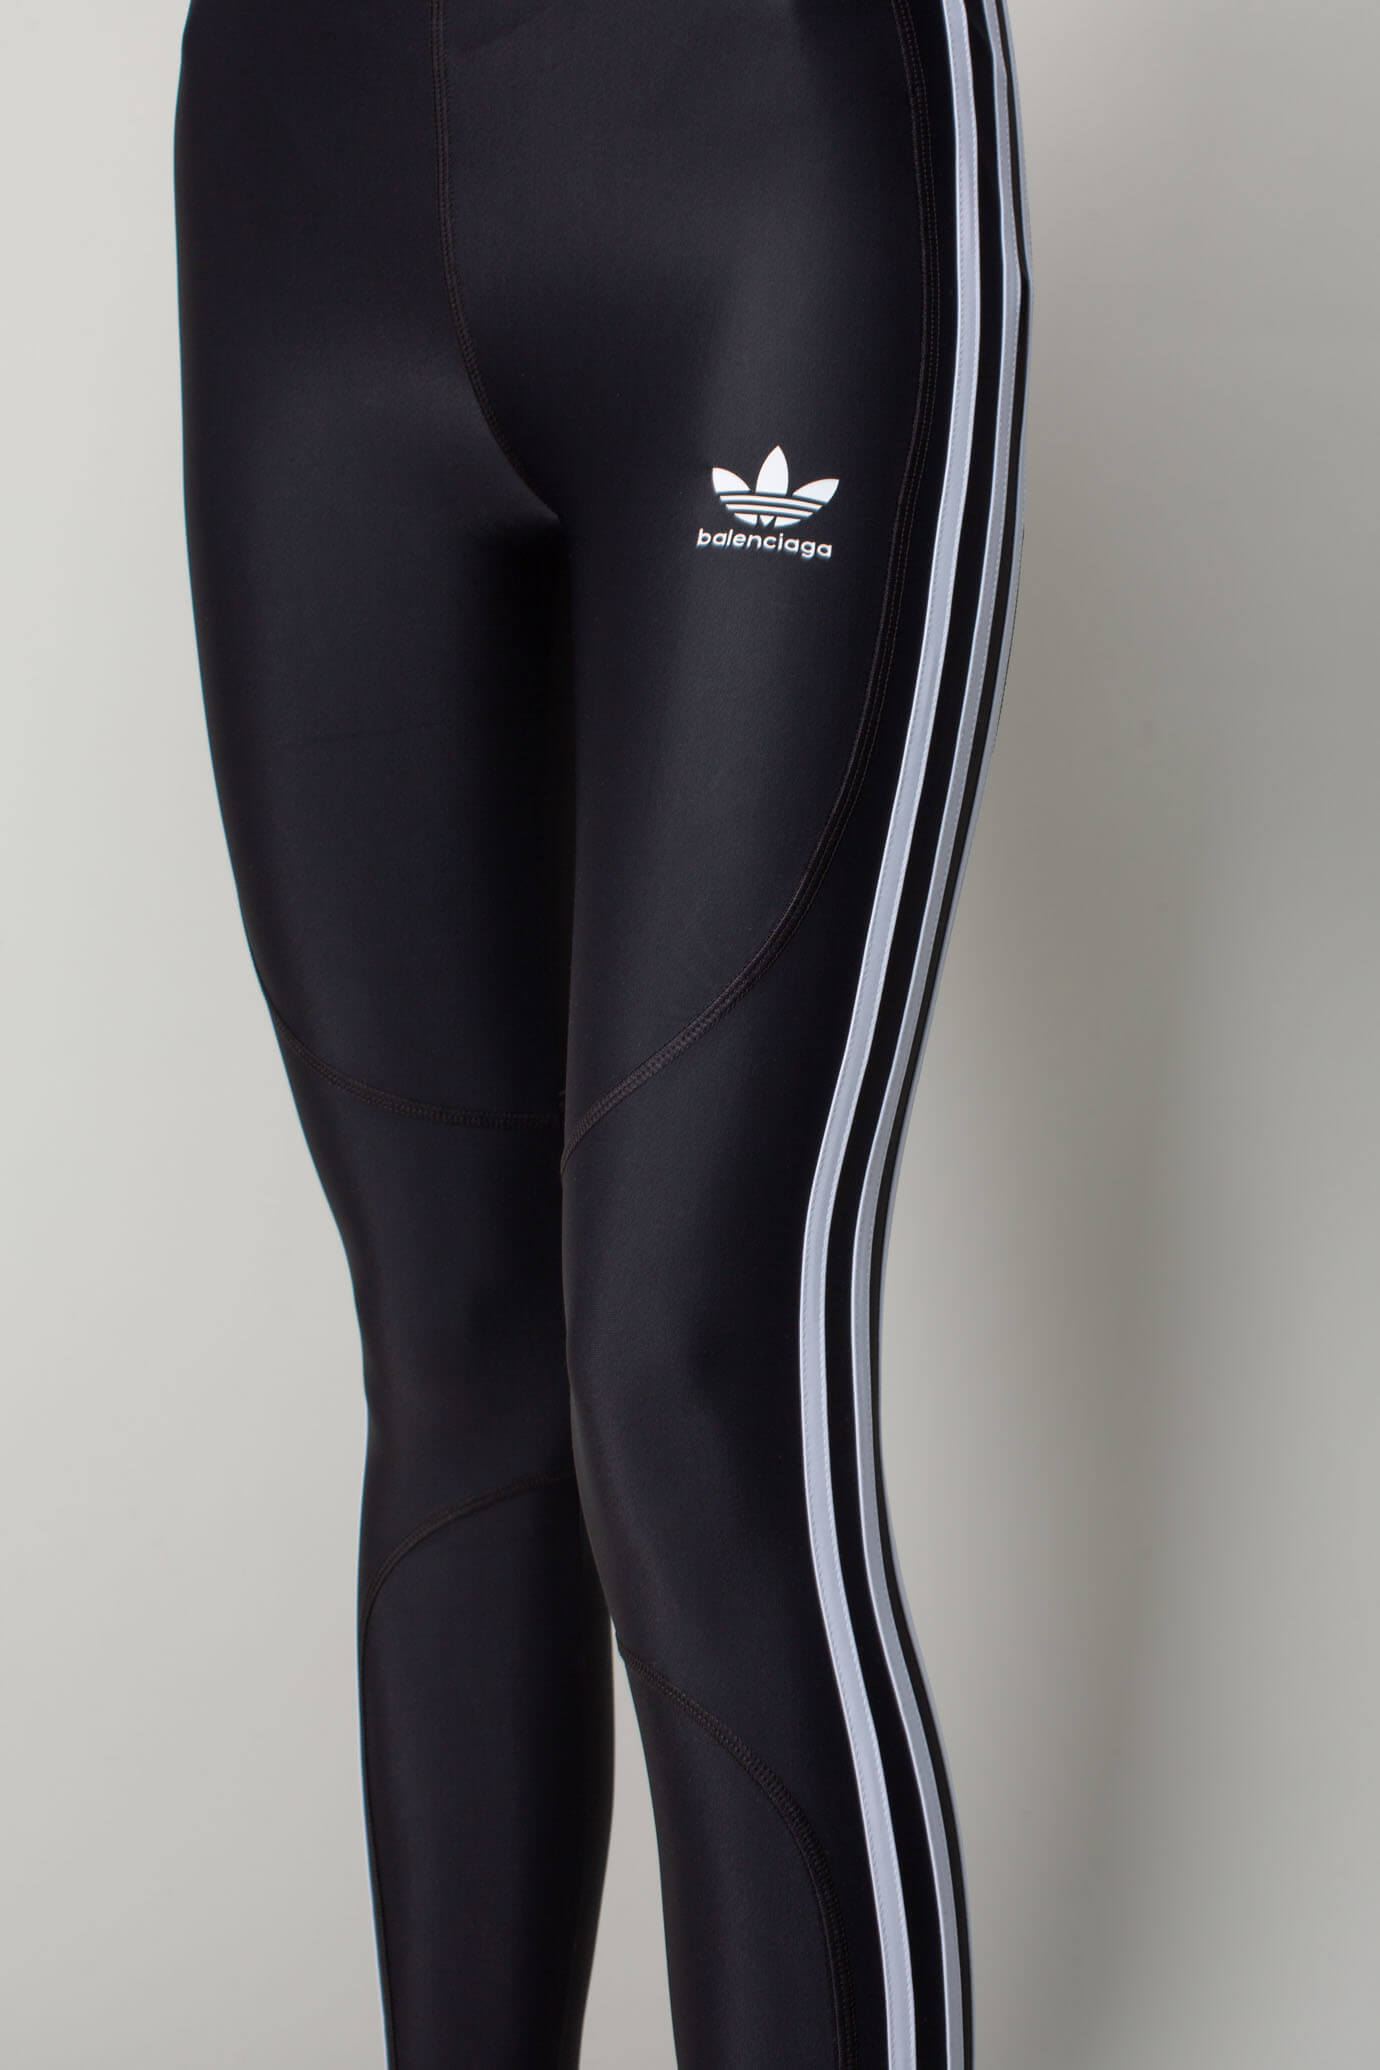 ADIDAS Activewear Pants 80s Spandex Running Gym Tights Stretch Pants Sz  Medium | eBay